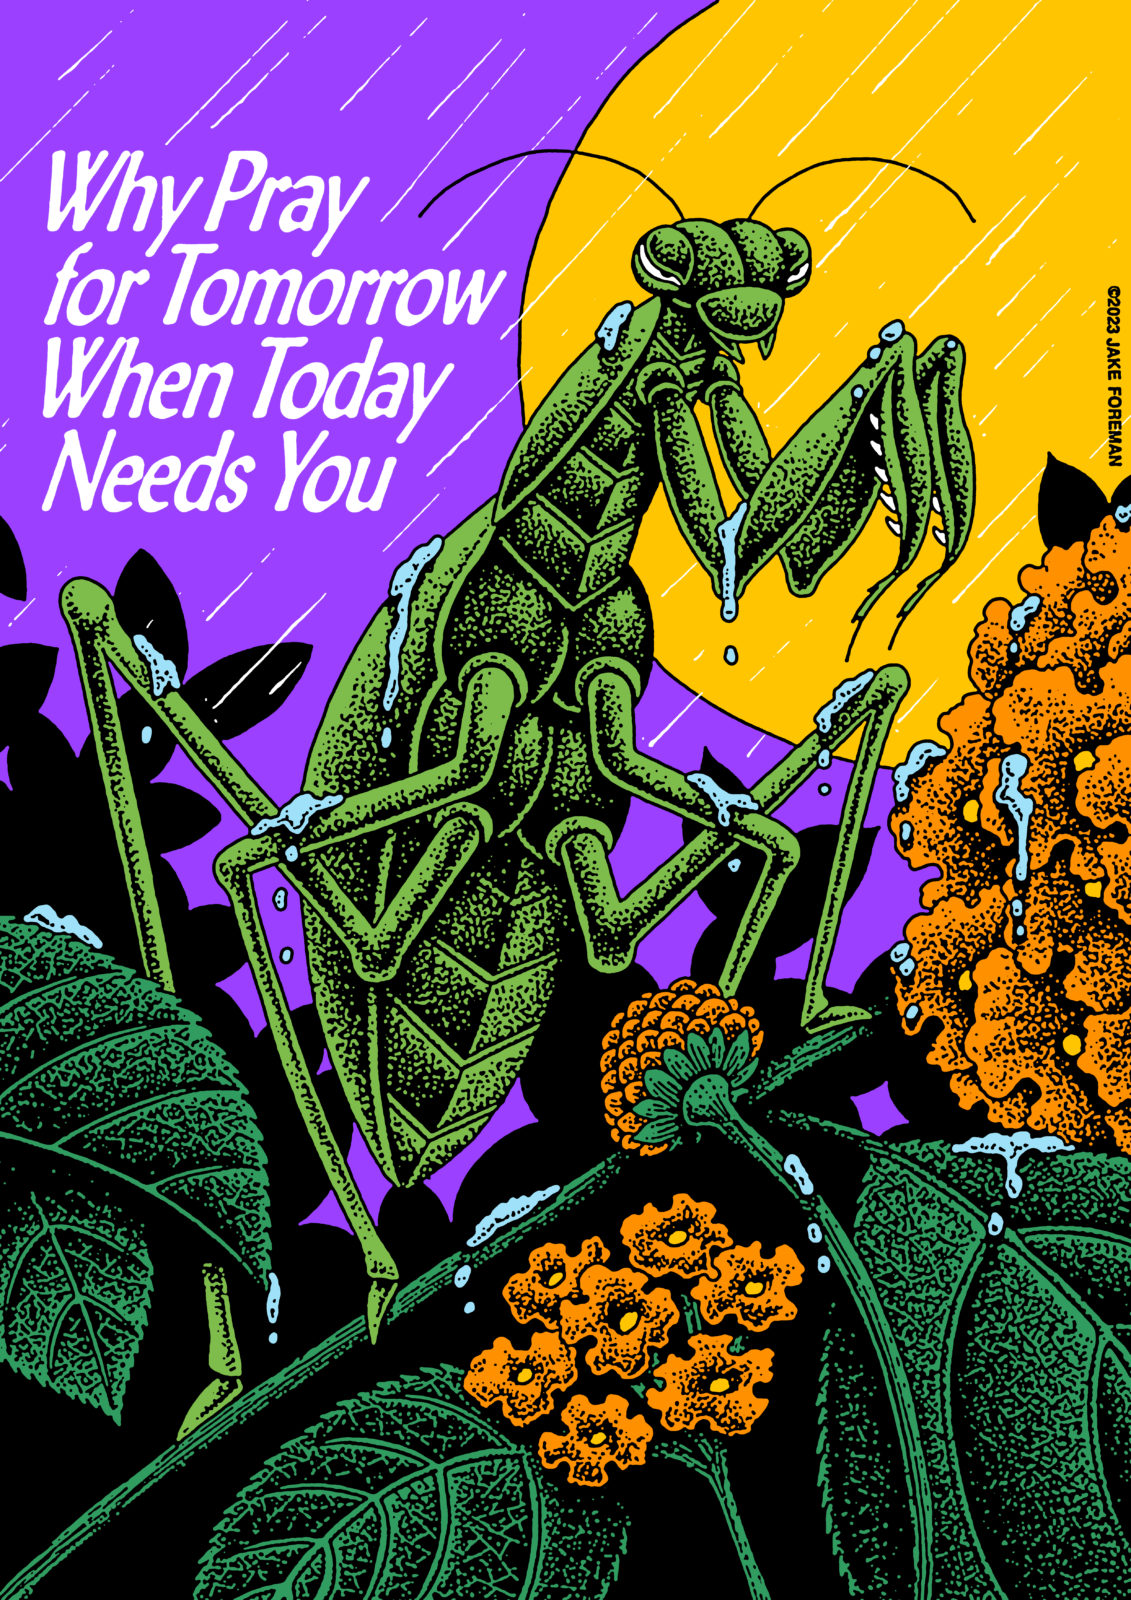 Pray by Jake Foreman - Kiblind magazine thème insectes